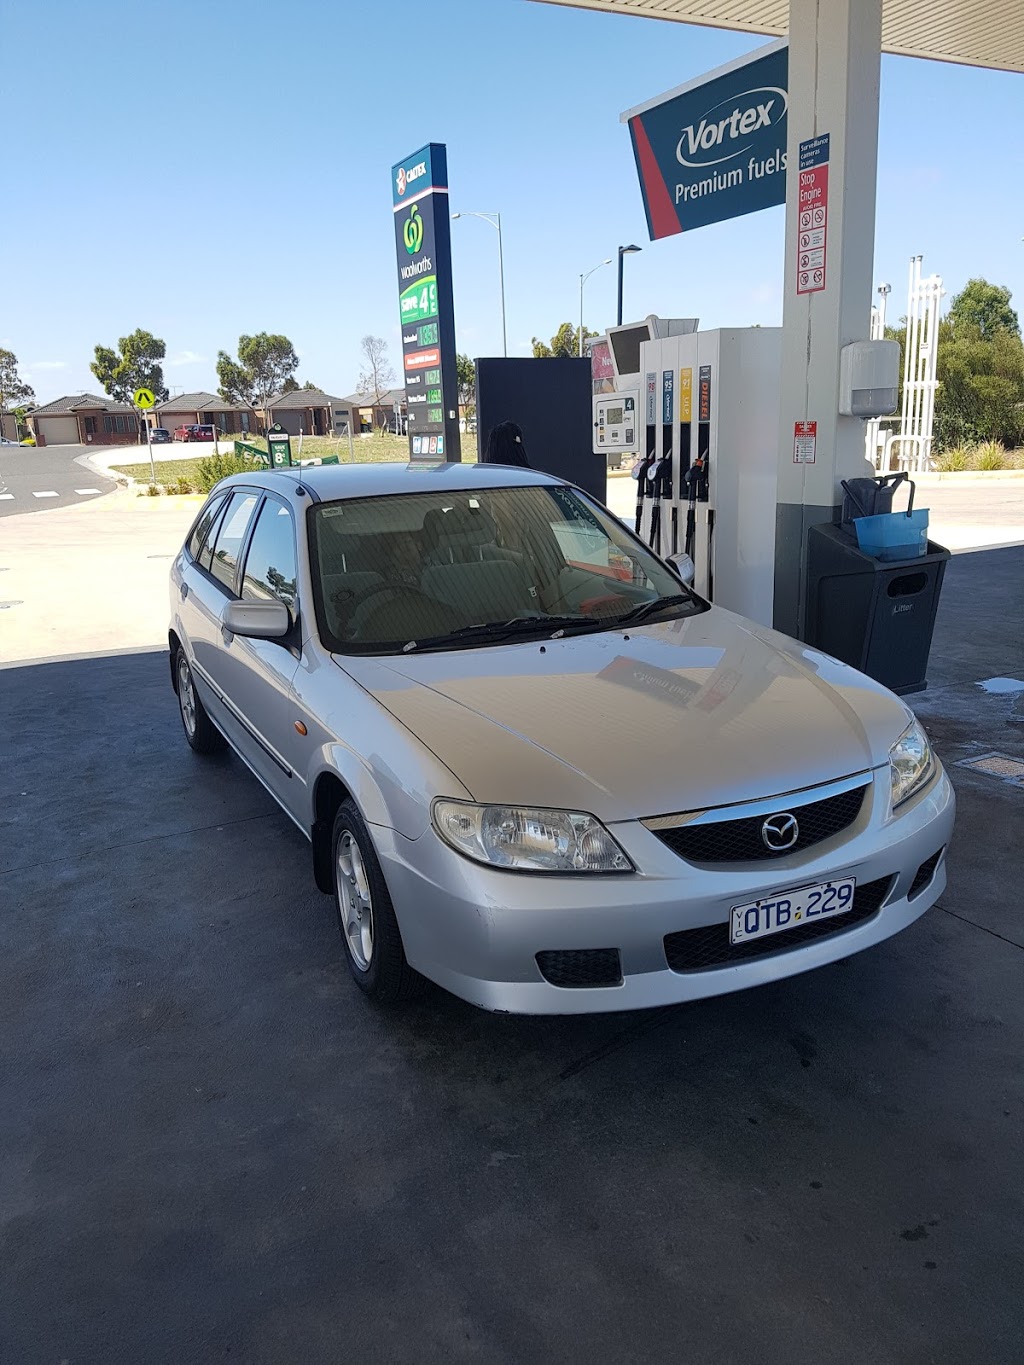 Woolworths Caltex | gas station | 5 Ambleside Ave, Wyndham Vale VIC 3024, Australia